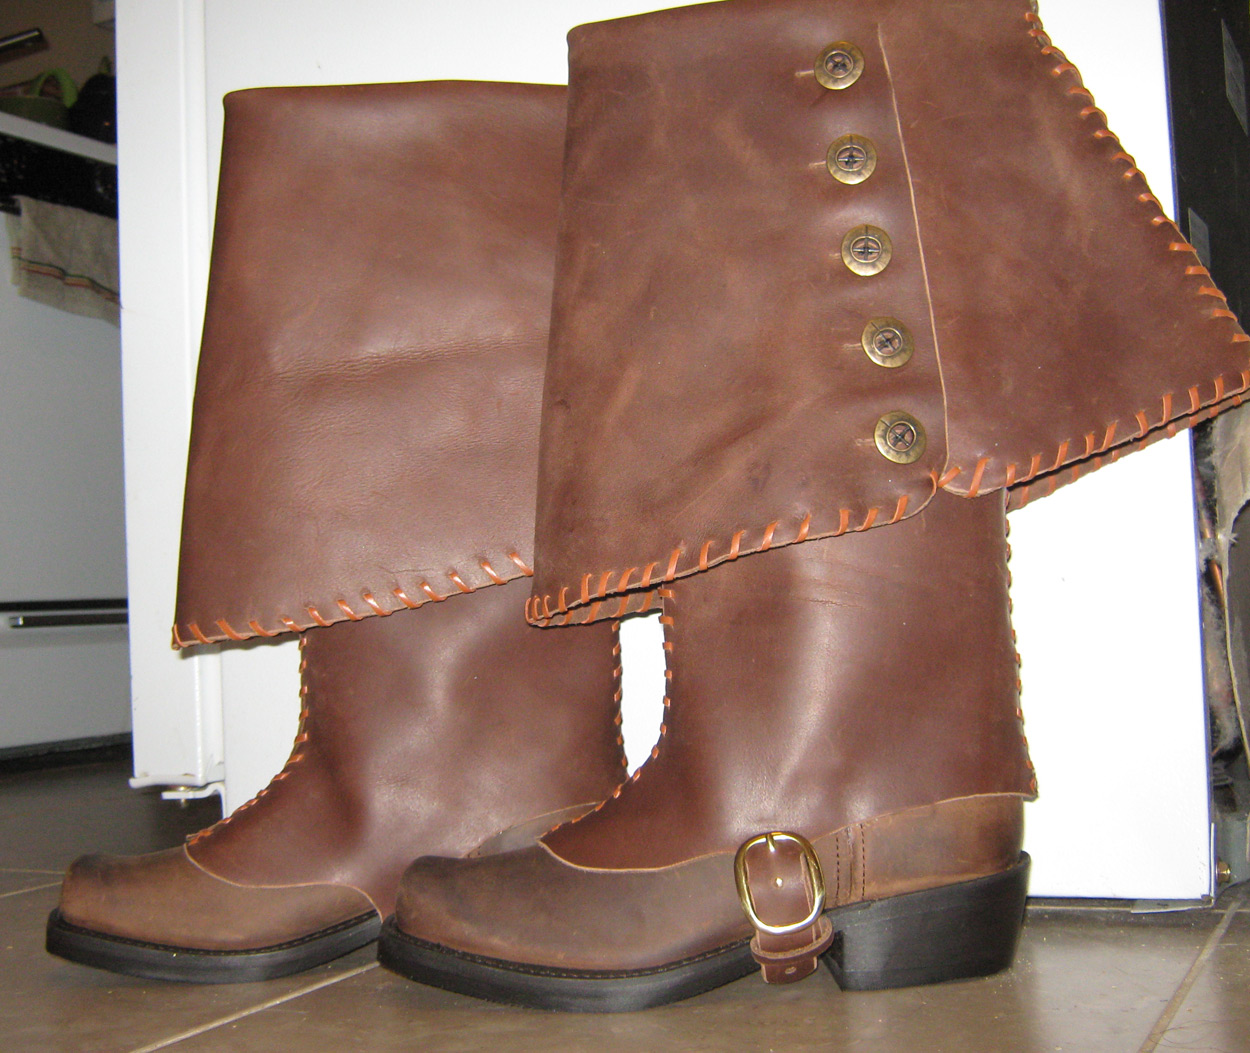 custom-pirate-boots-leather-stitching-009.jpg